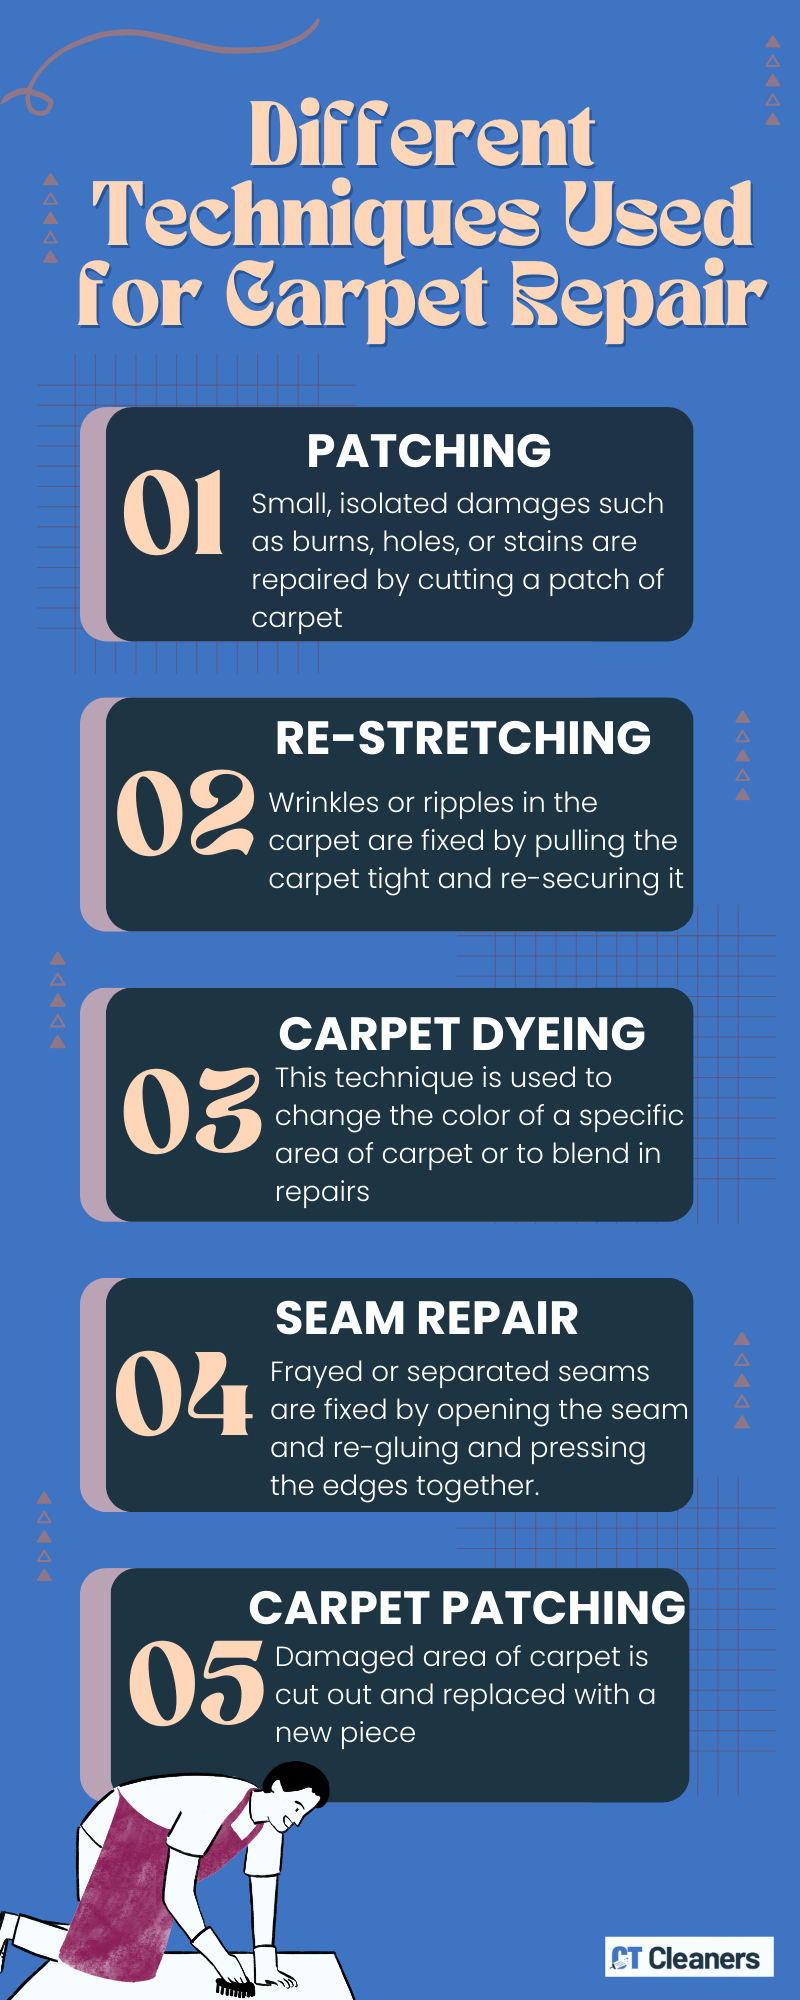 Different Techniques Used for Carpet Repair